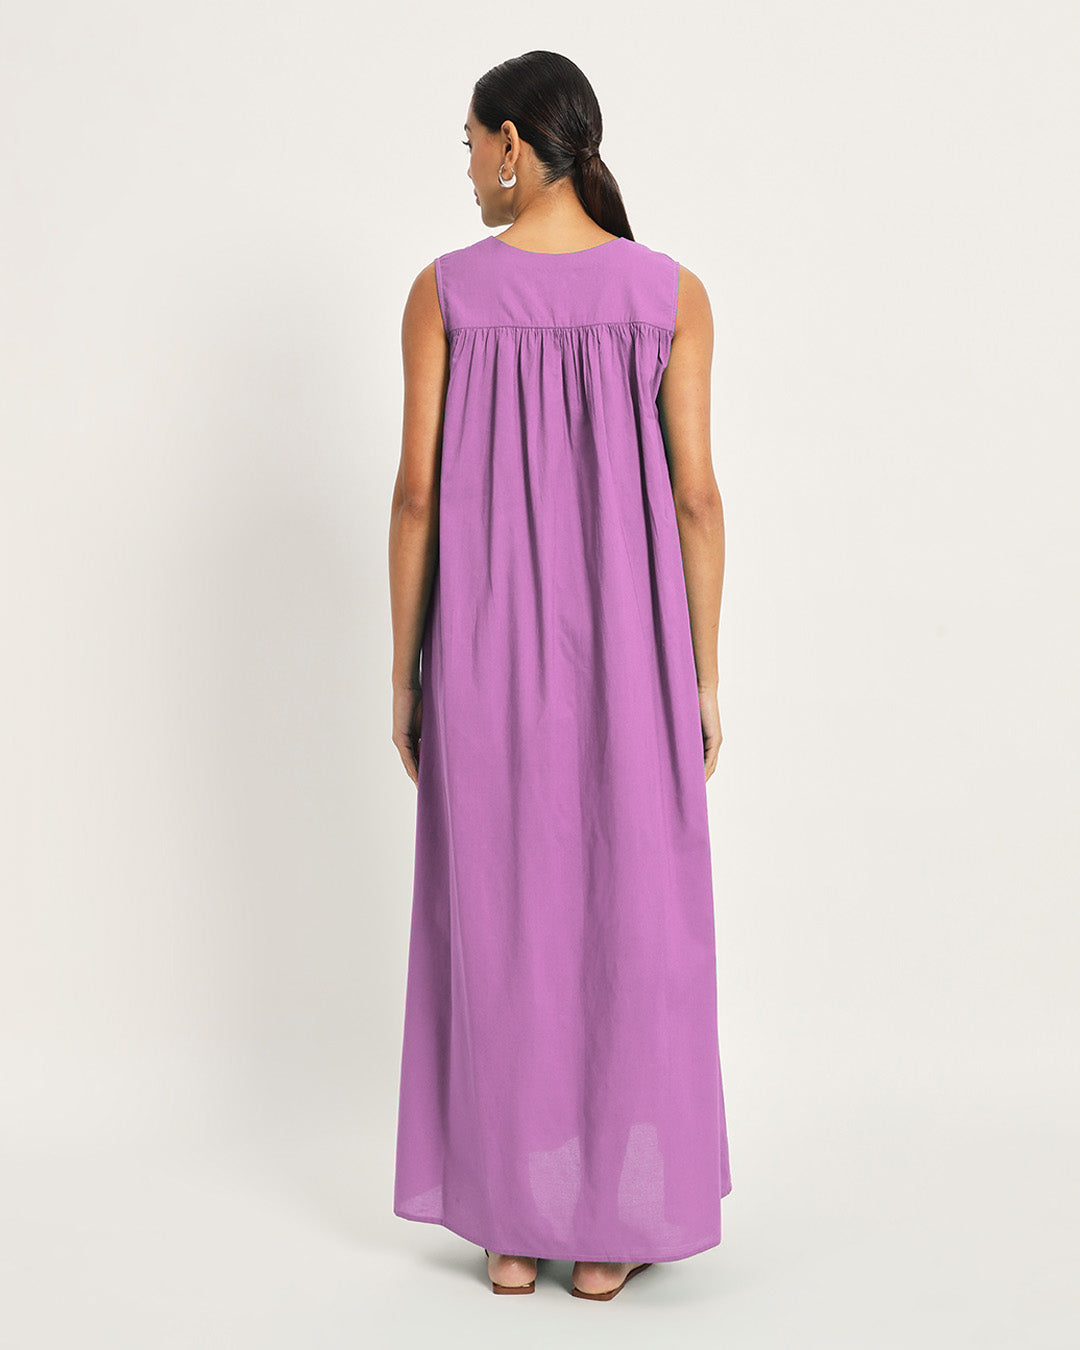 Combo: Lilac & Wisteria Purple Restful Retreat Nightdress